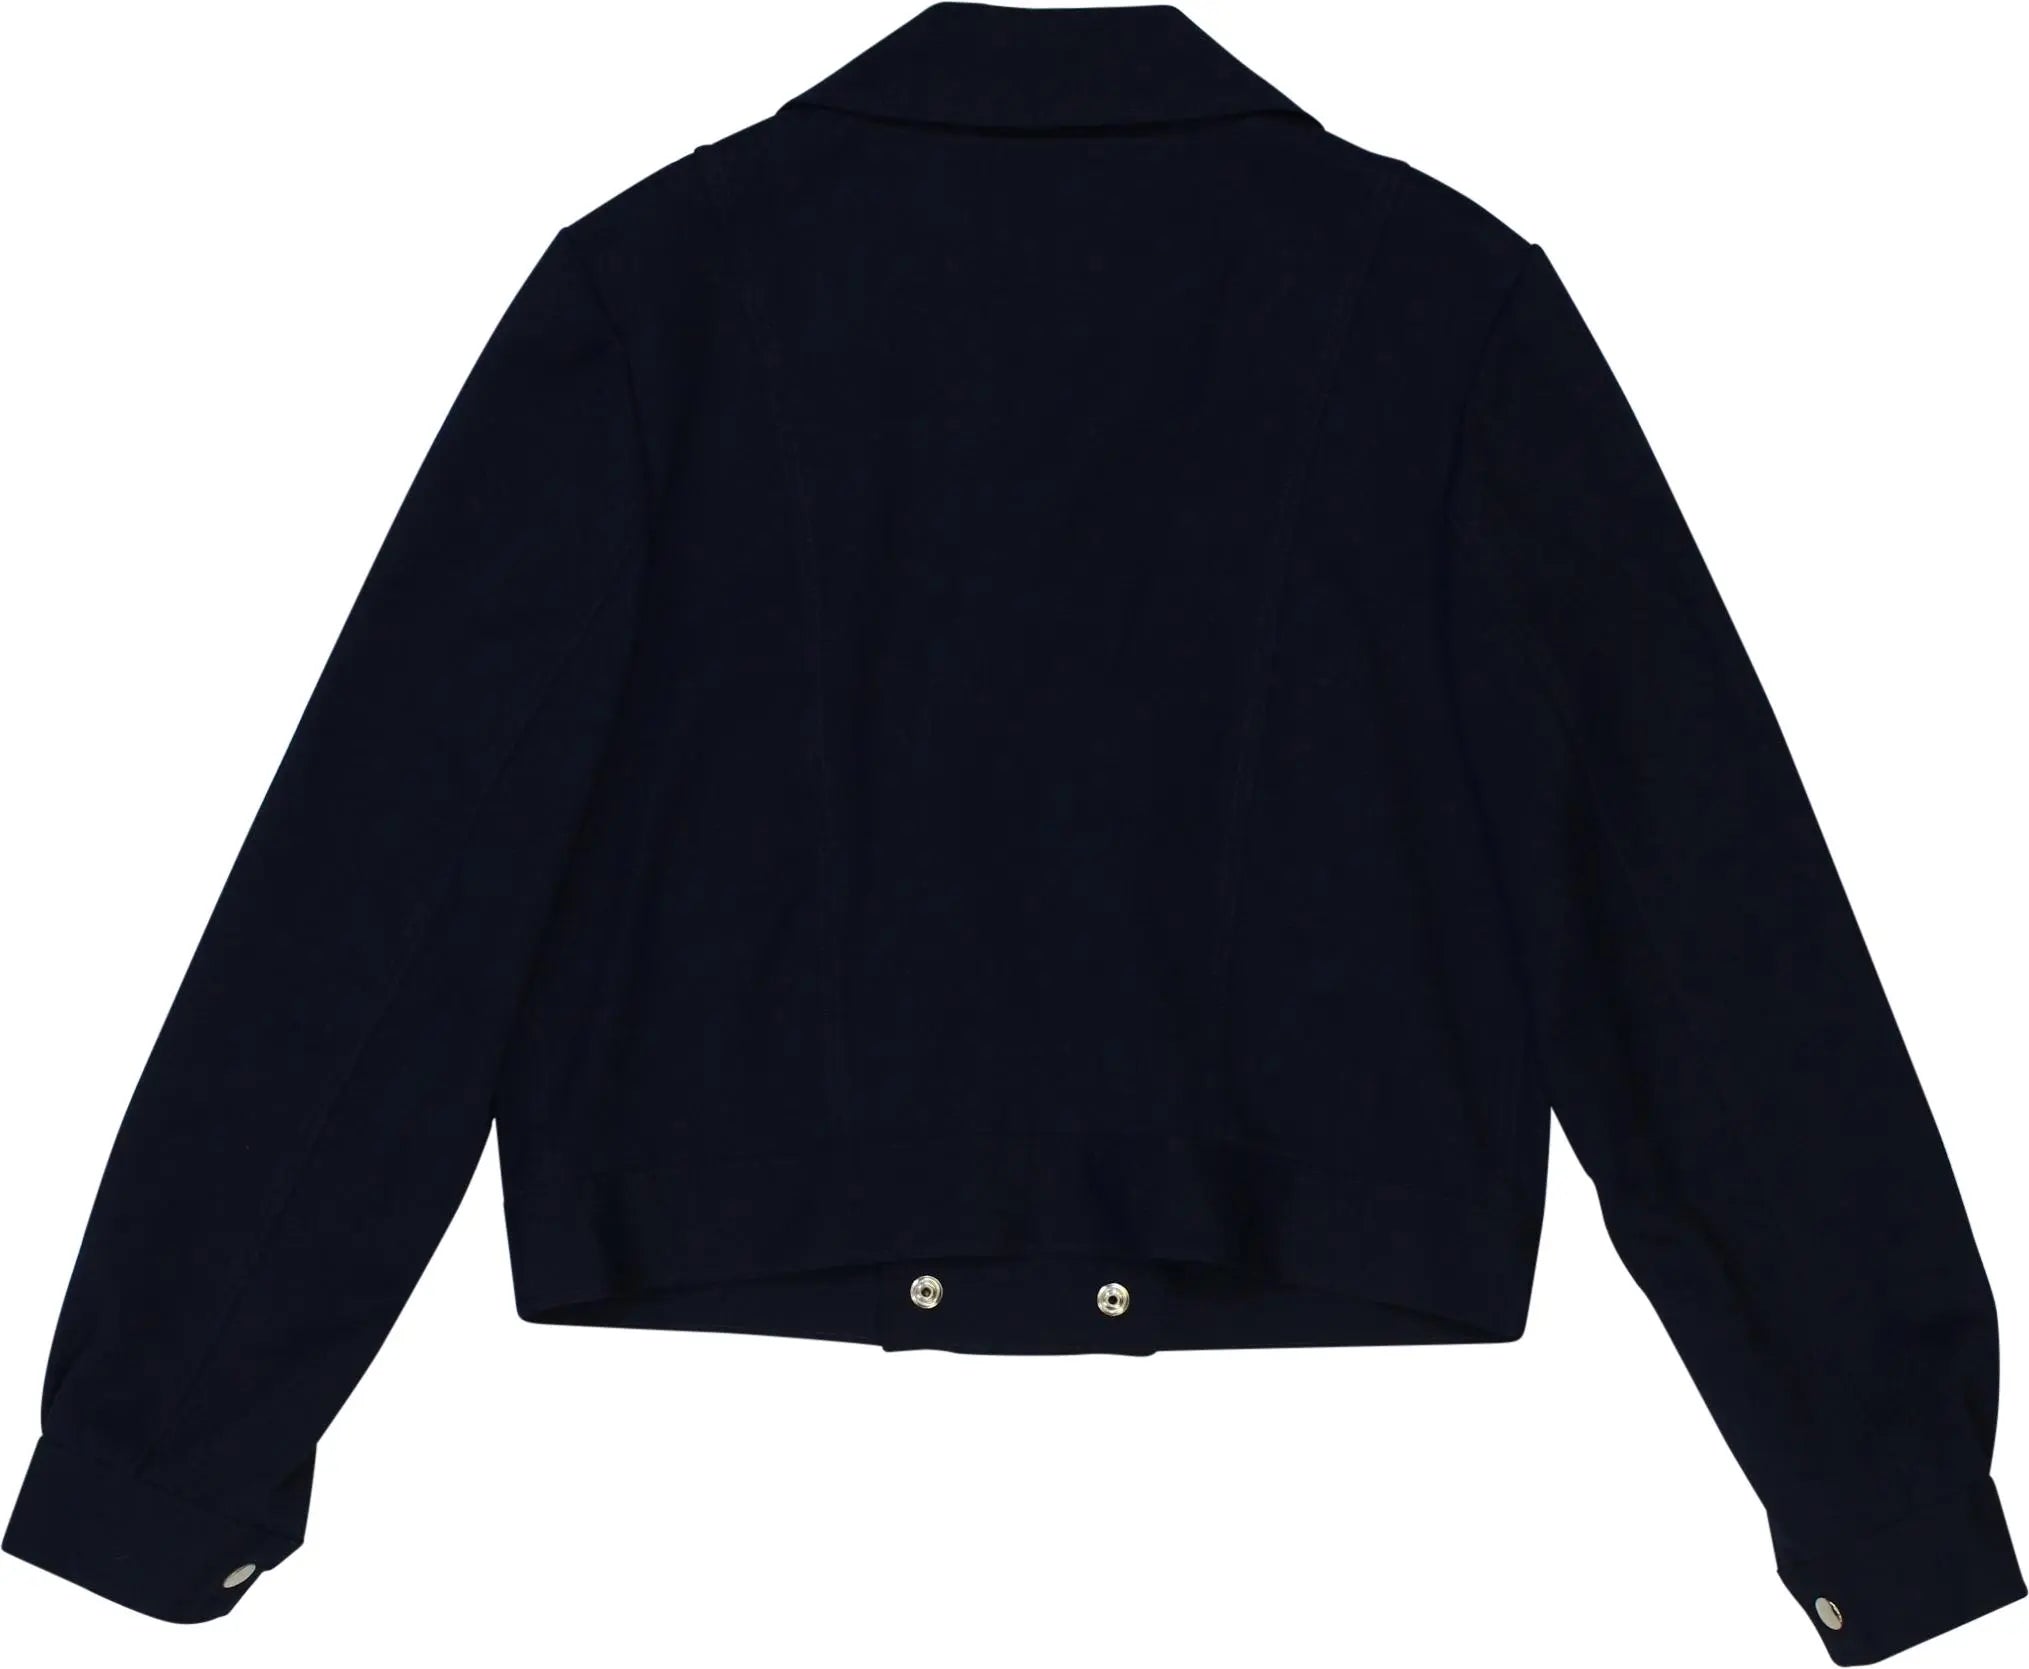 Confezioni - Blue Jacket- ThriftTale.com - Vintage and second handclothing